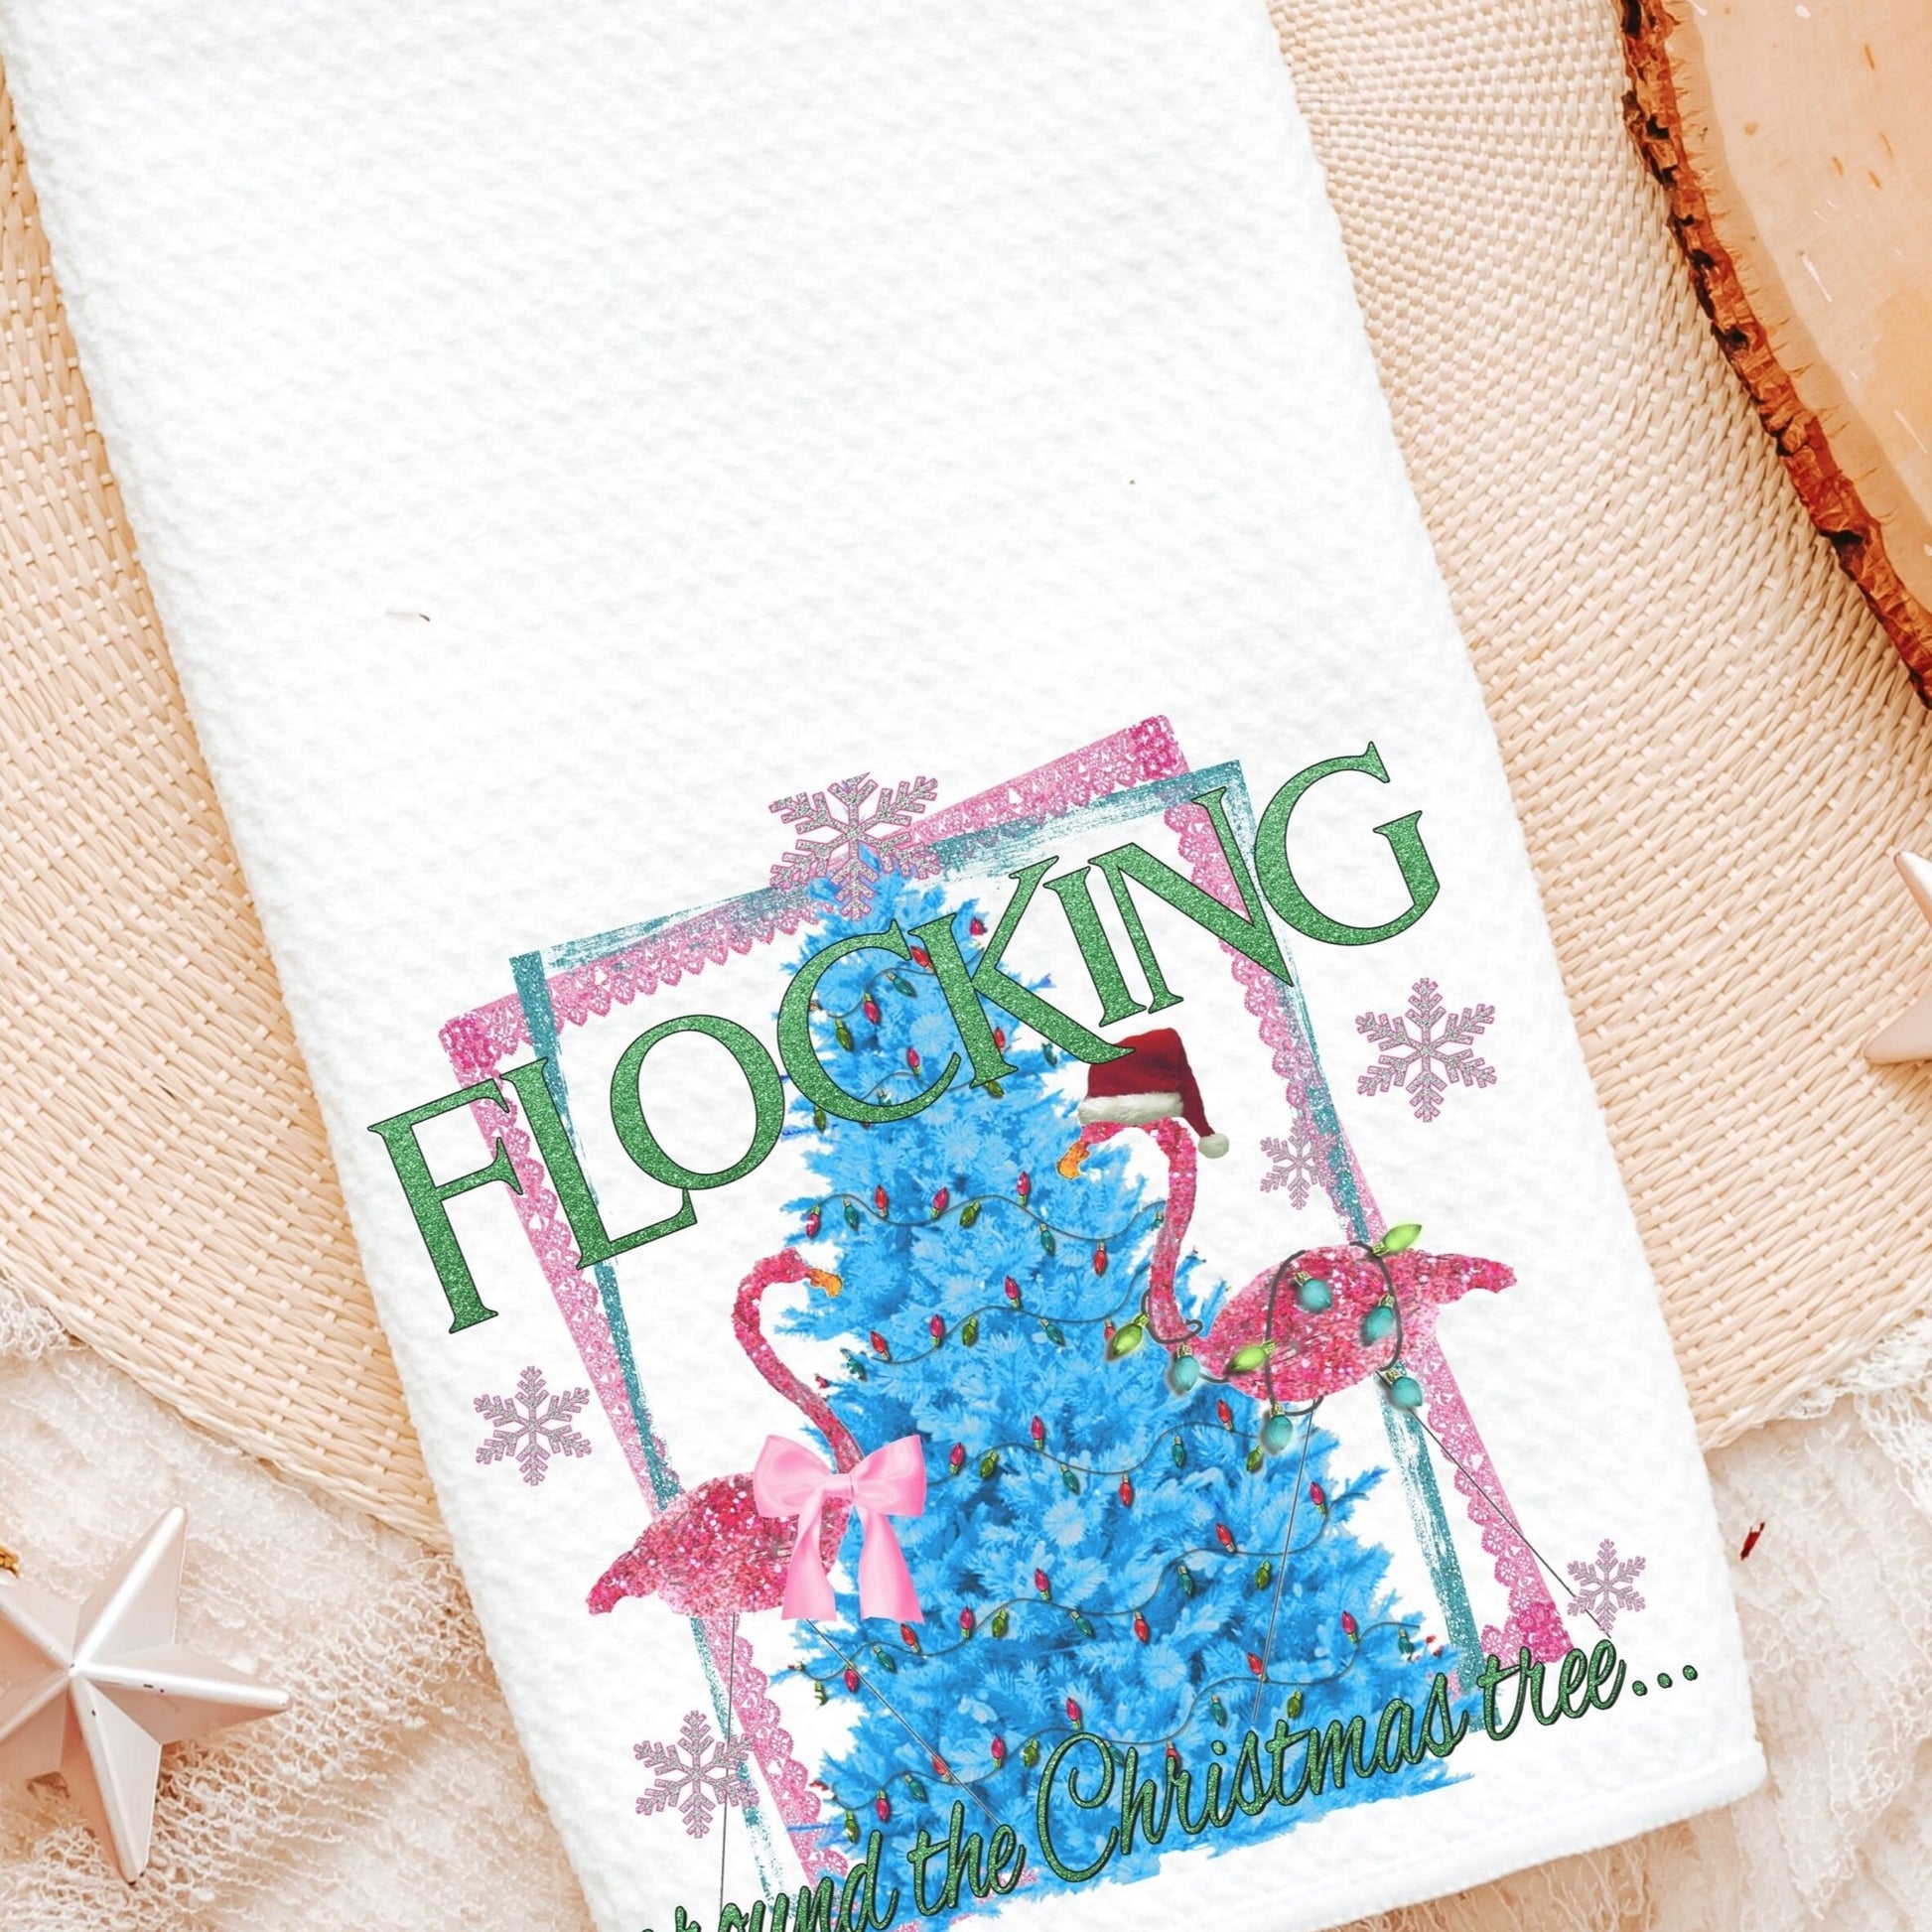 Flocking Around The Christmas Tree Flamingo Pillow and Towel Gift Set